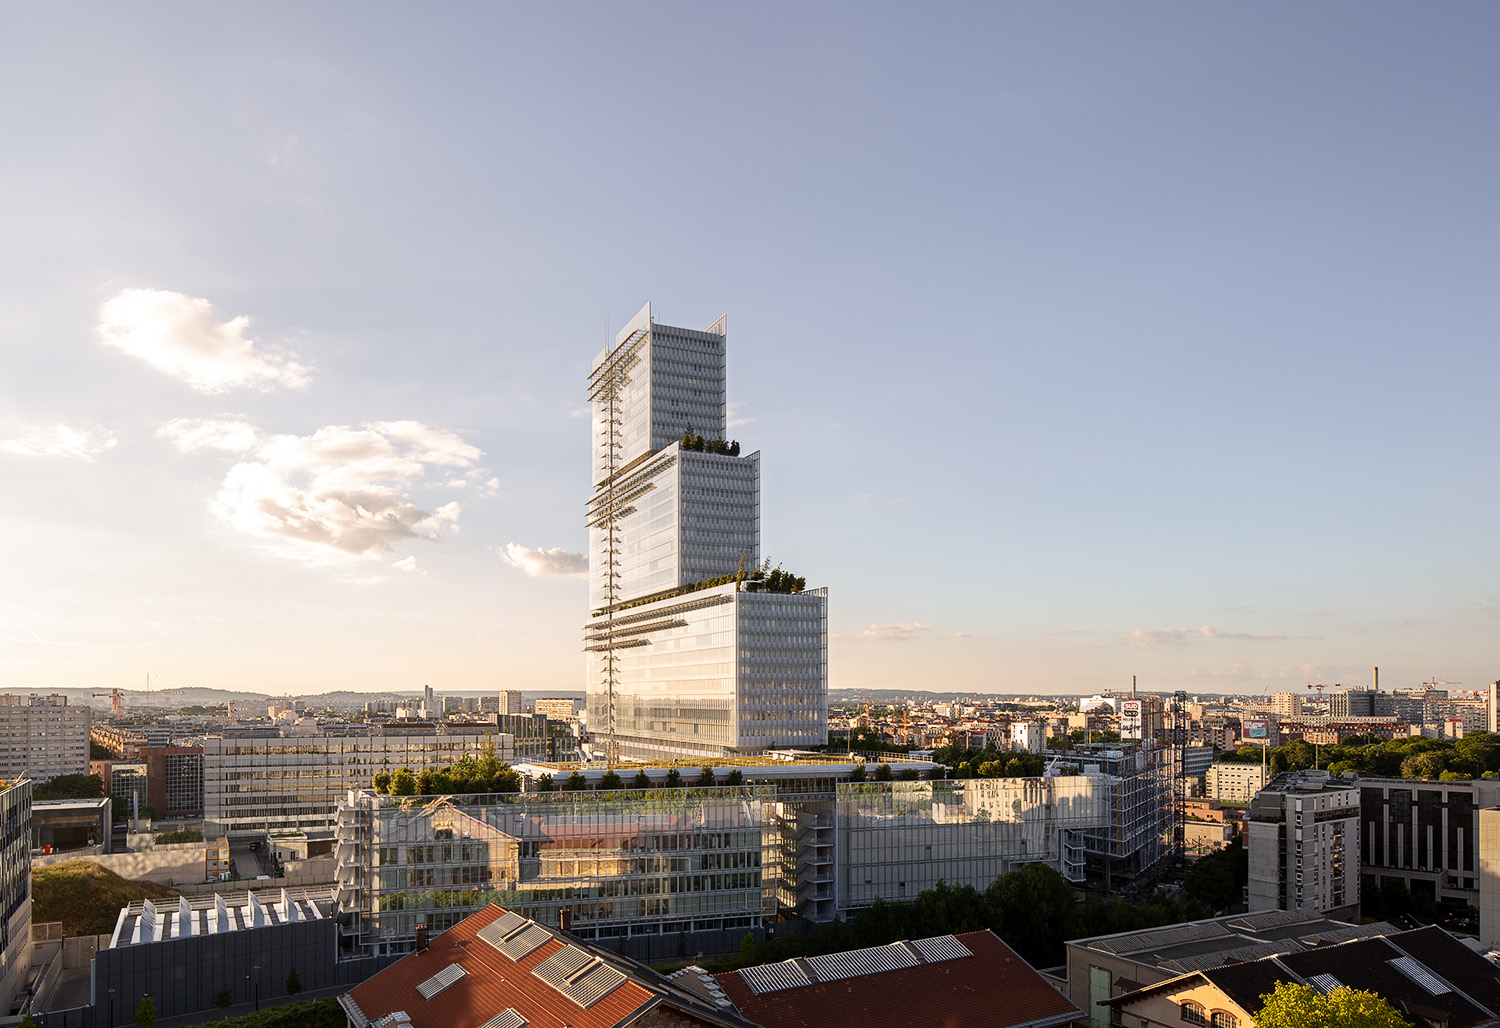  Paris Courthouse - Renzo Piano Building Workshop 